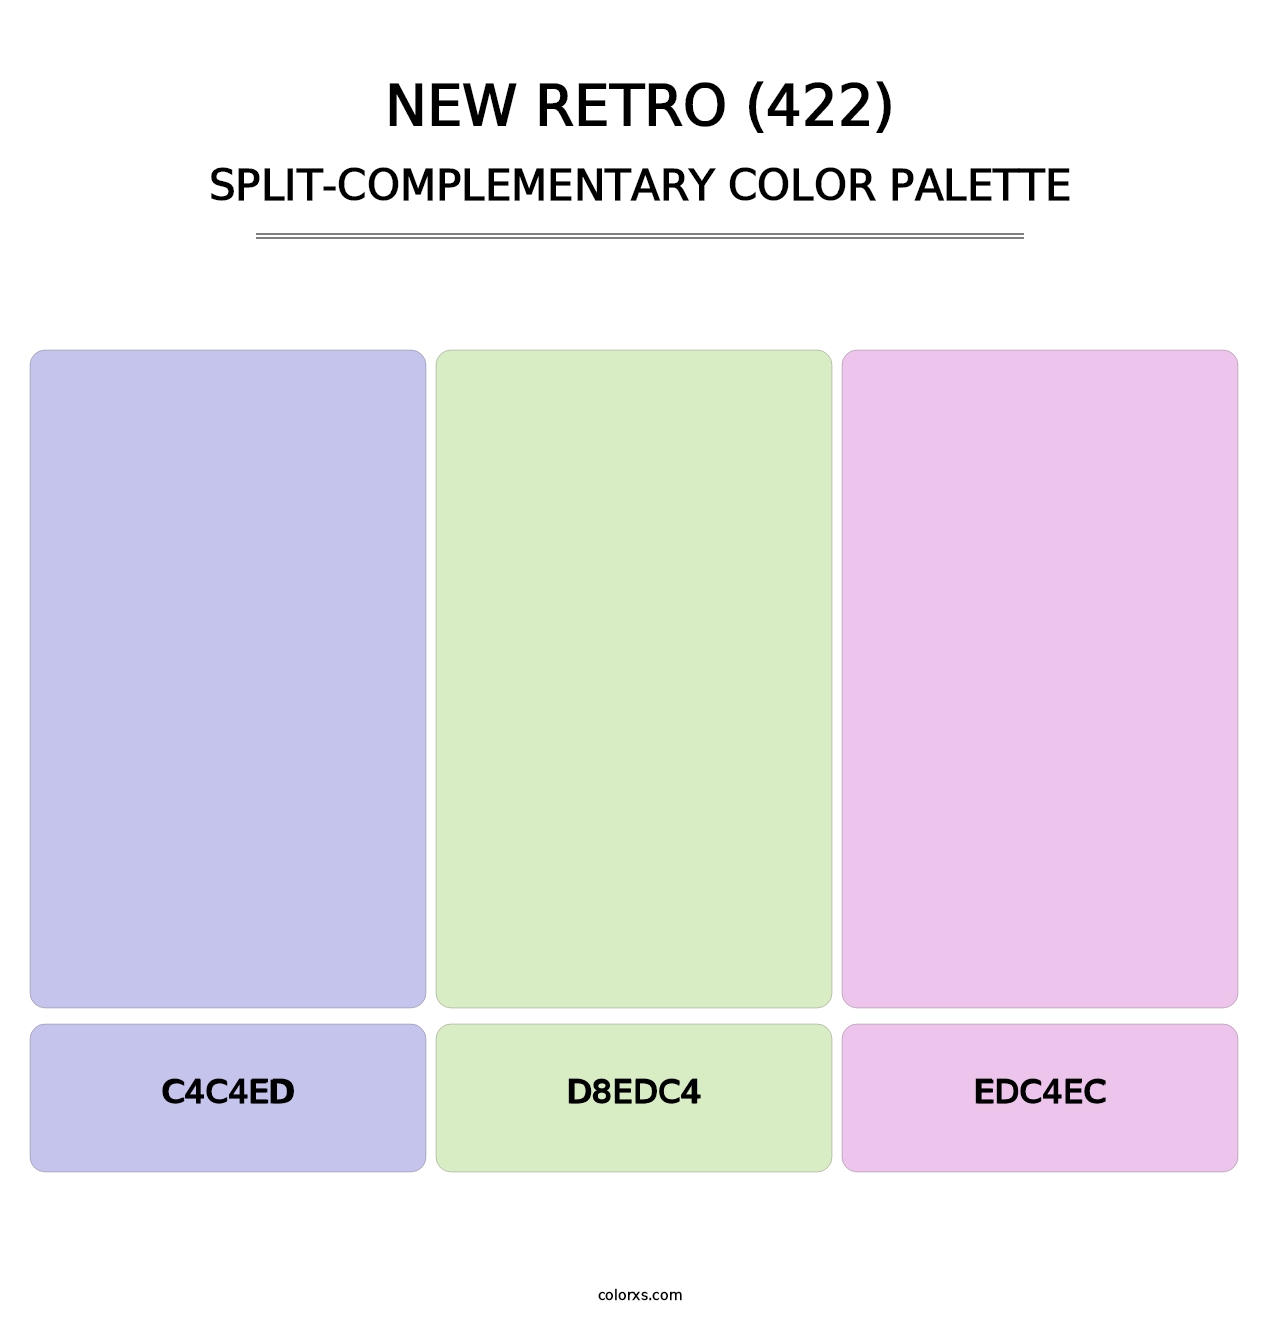 New Retro (422) - Split-Complementary Color Palette